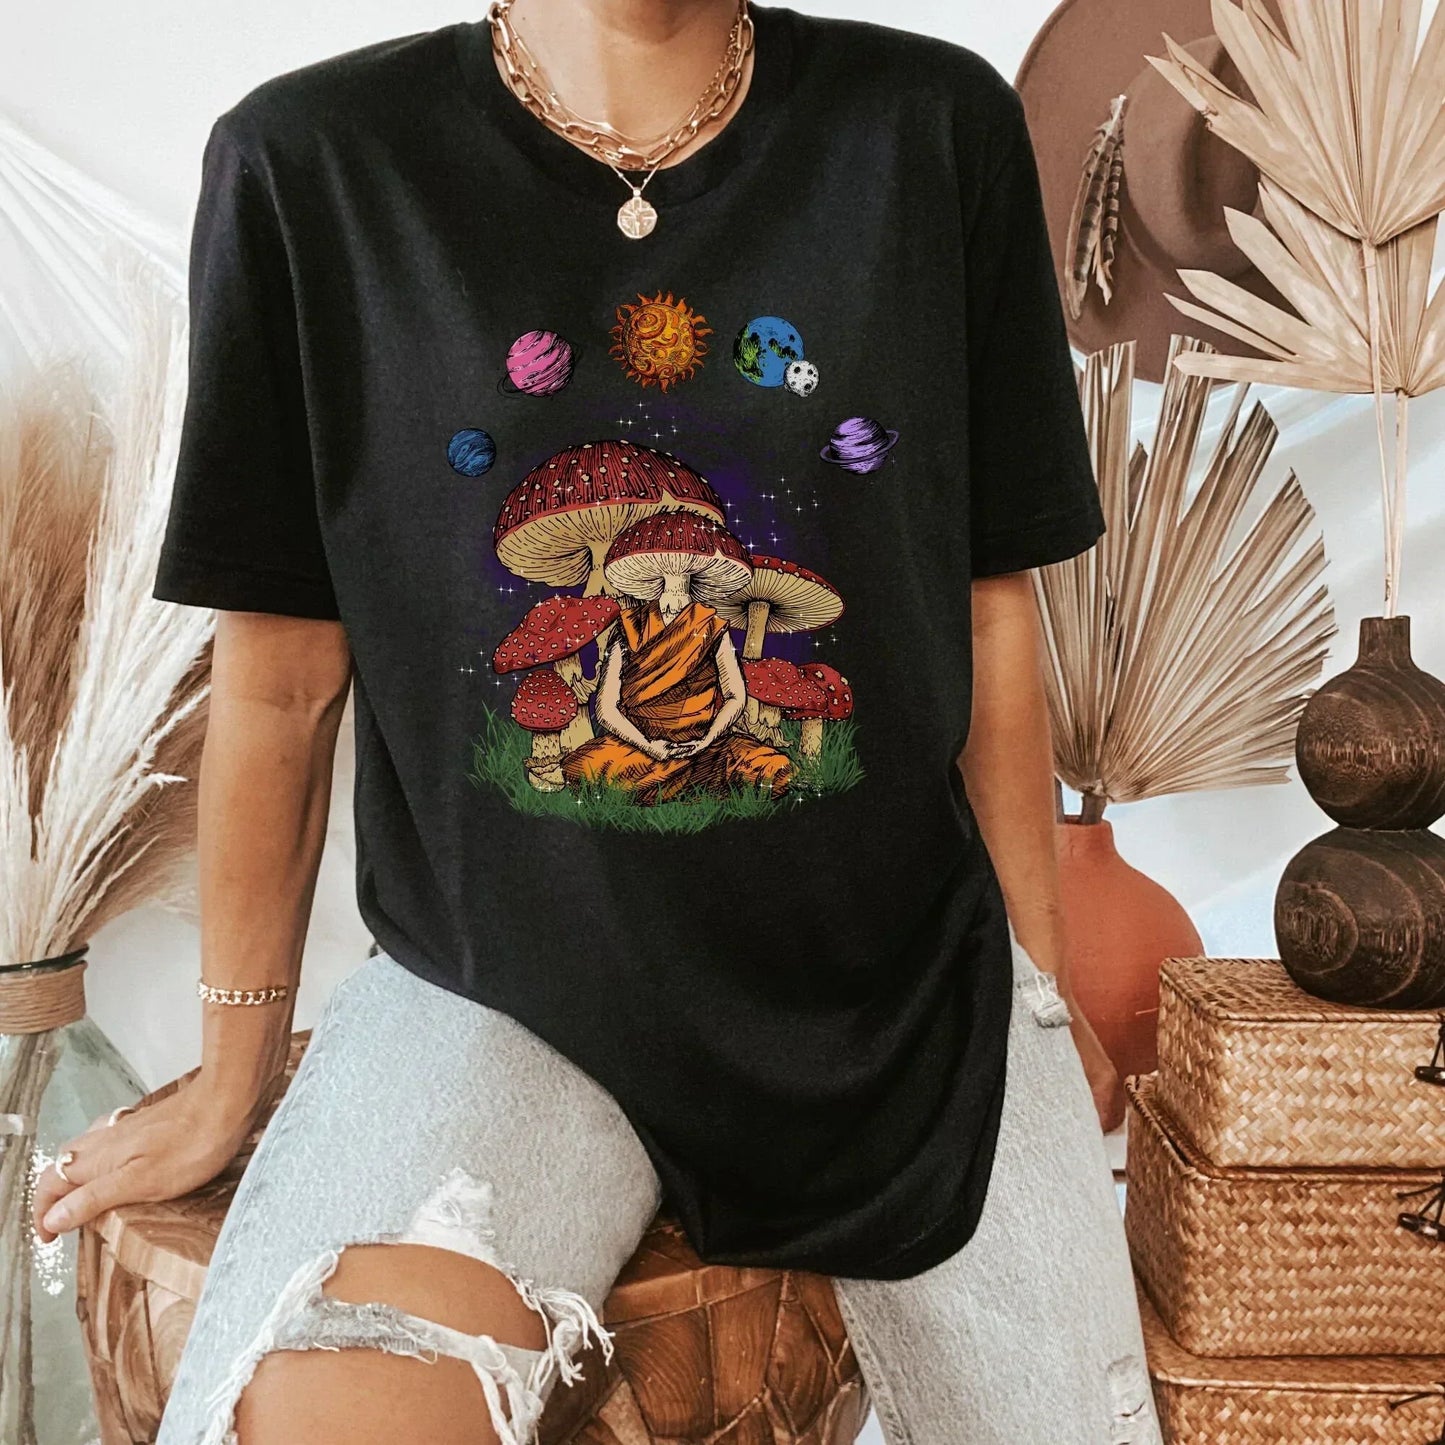 Magic Mushroom Shirt, Mushroom Sweater, Celestial Shirt, Dark Academia, Goblincore Clothing, Pastel Goth Sweatshirt, Moon Cottagecore Shirt